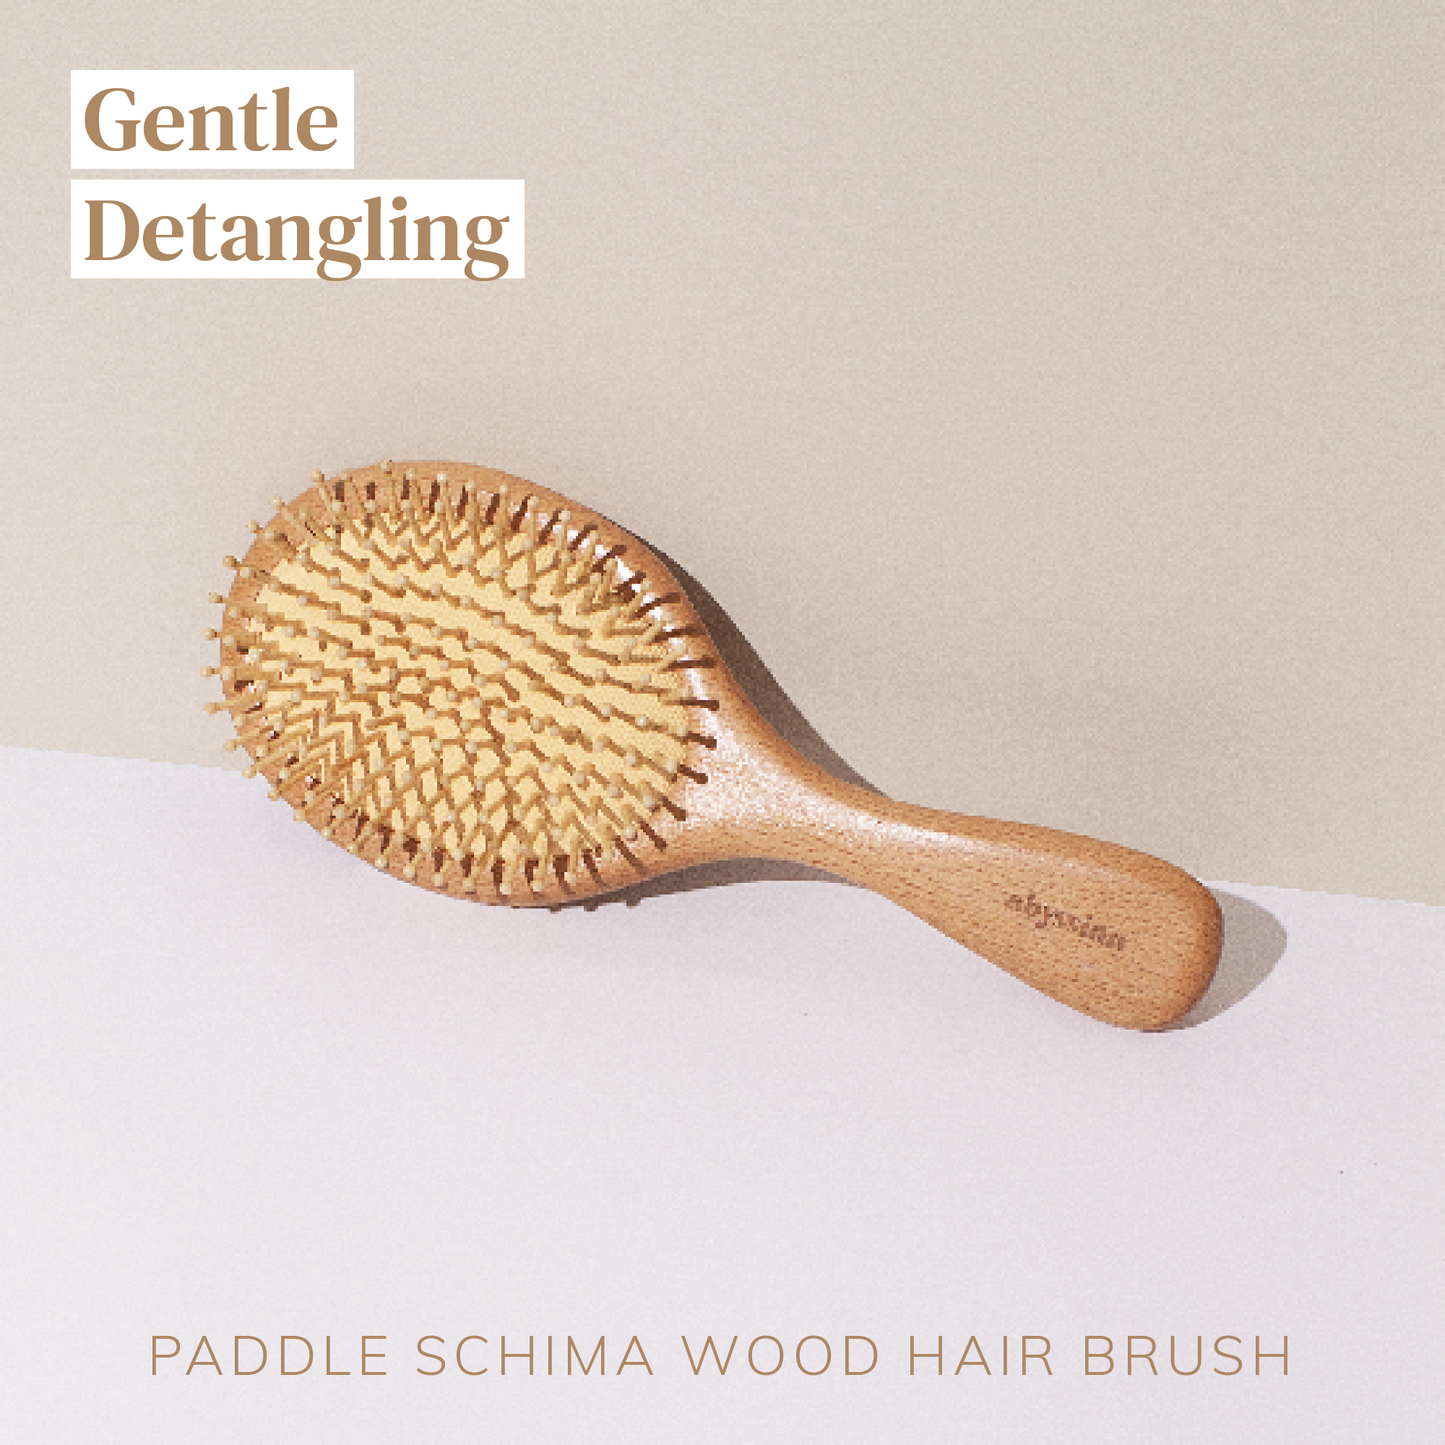 Paddle Schima Wood Hair Brush